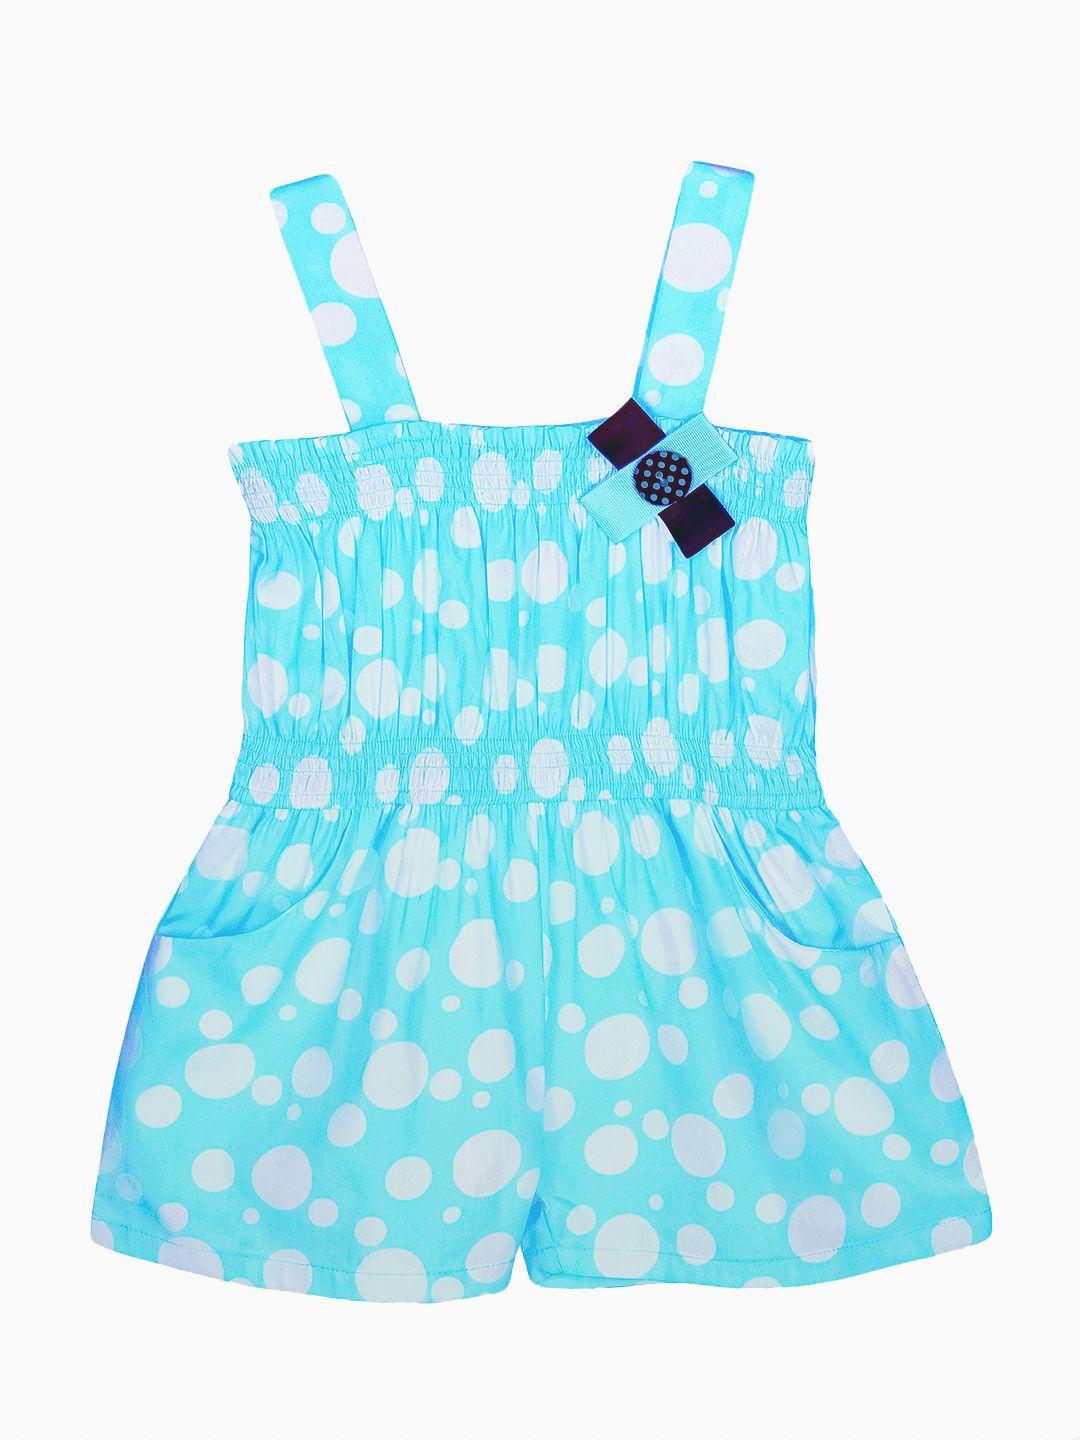 caca cina infant girls turquoise blue & white polka dot printed cotton smocked romper